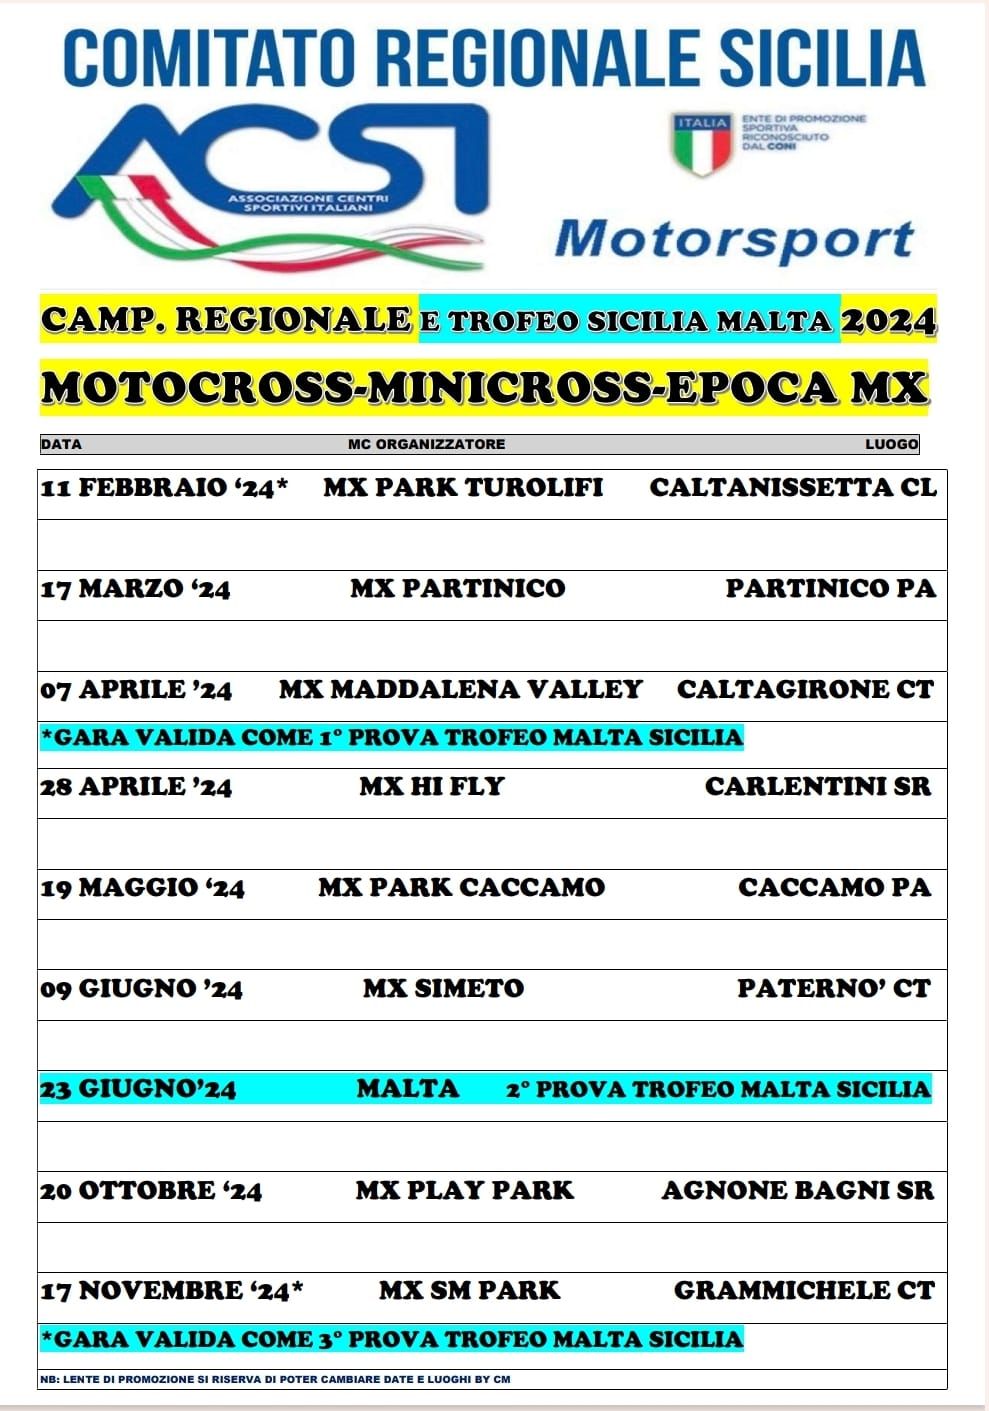 CAMPIONATO REGIONALE MOTOCROSS/MINICROSS/EPOCA